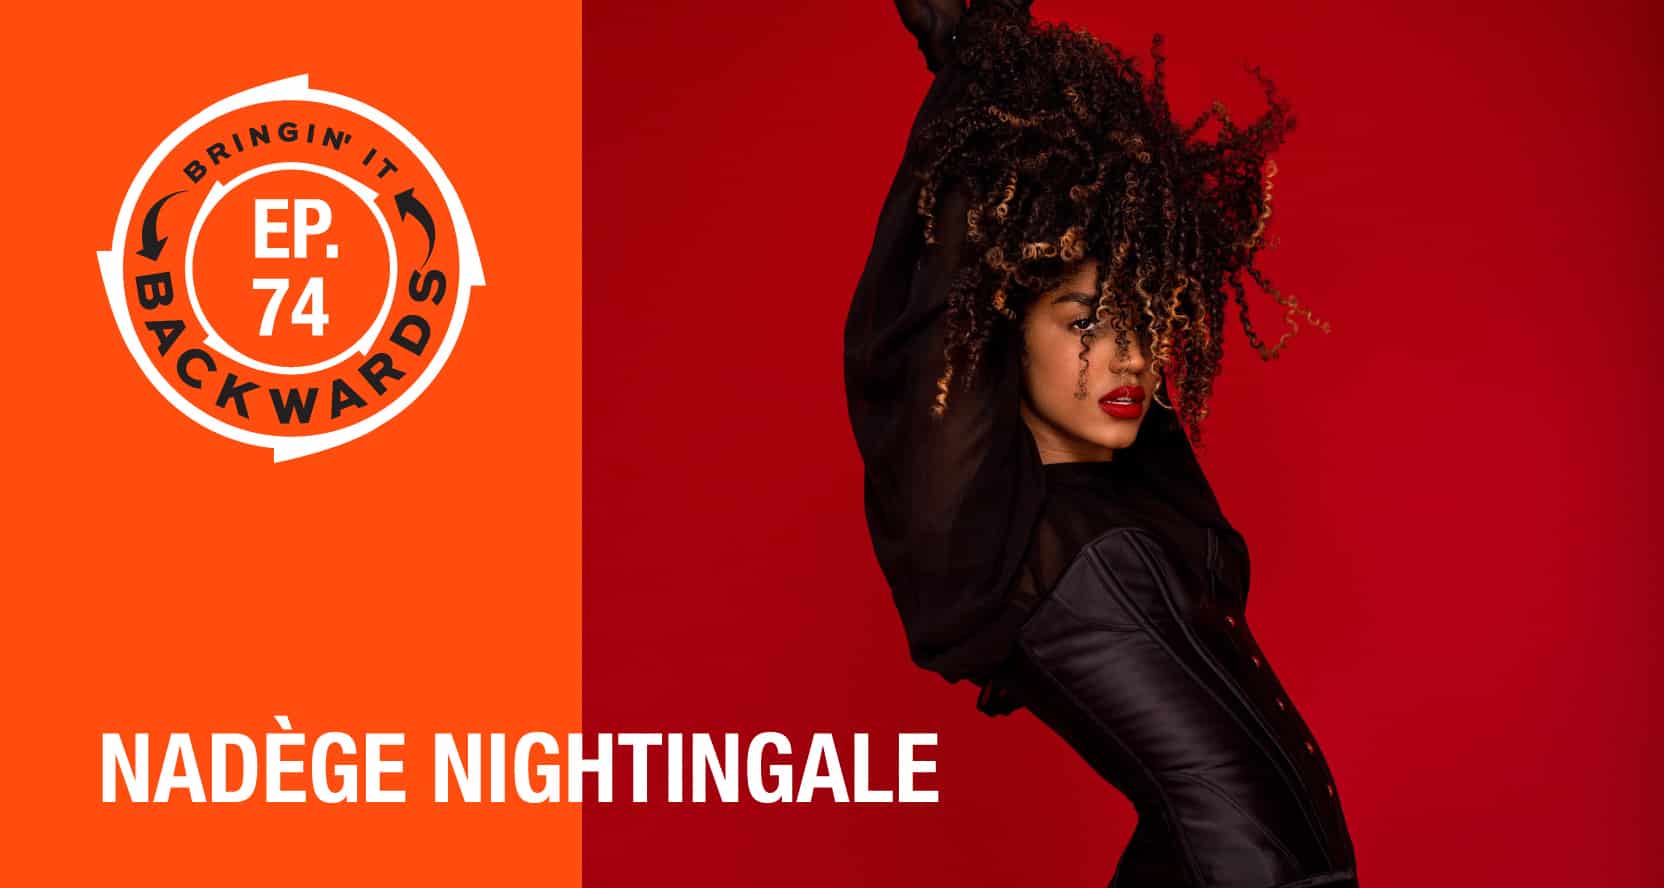 Bringin’ it Backwards: Interview with Nadège Nightingale